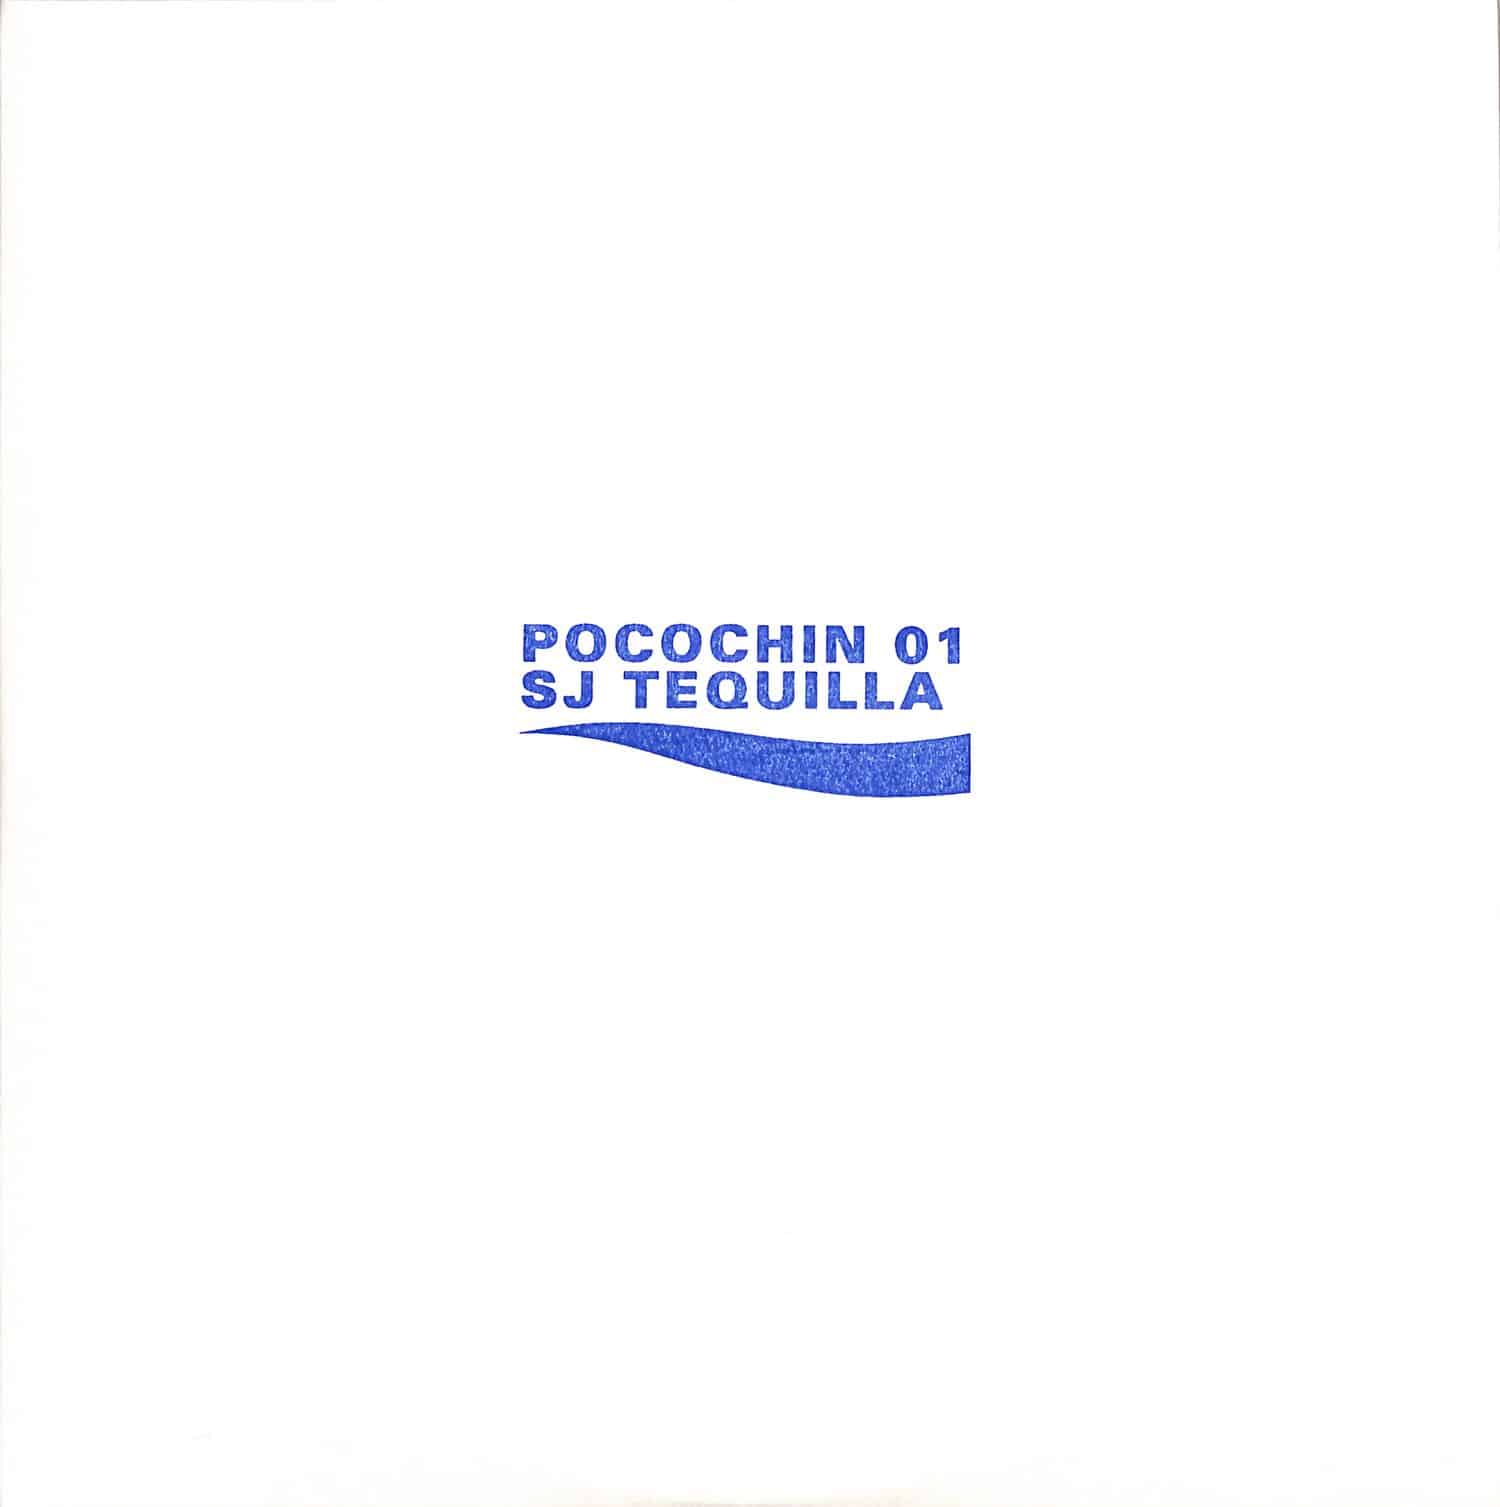 Sj Tequilla - POCOCHIN 01